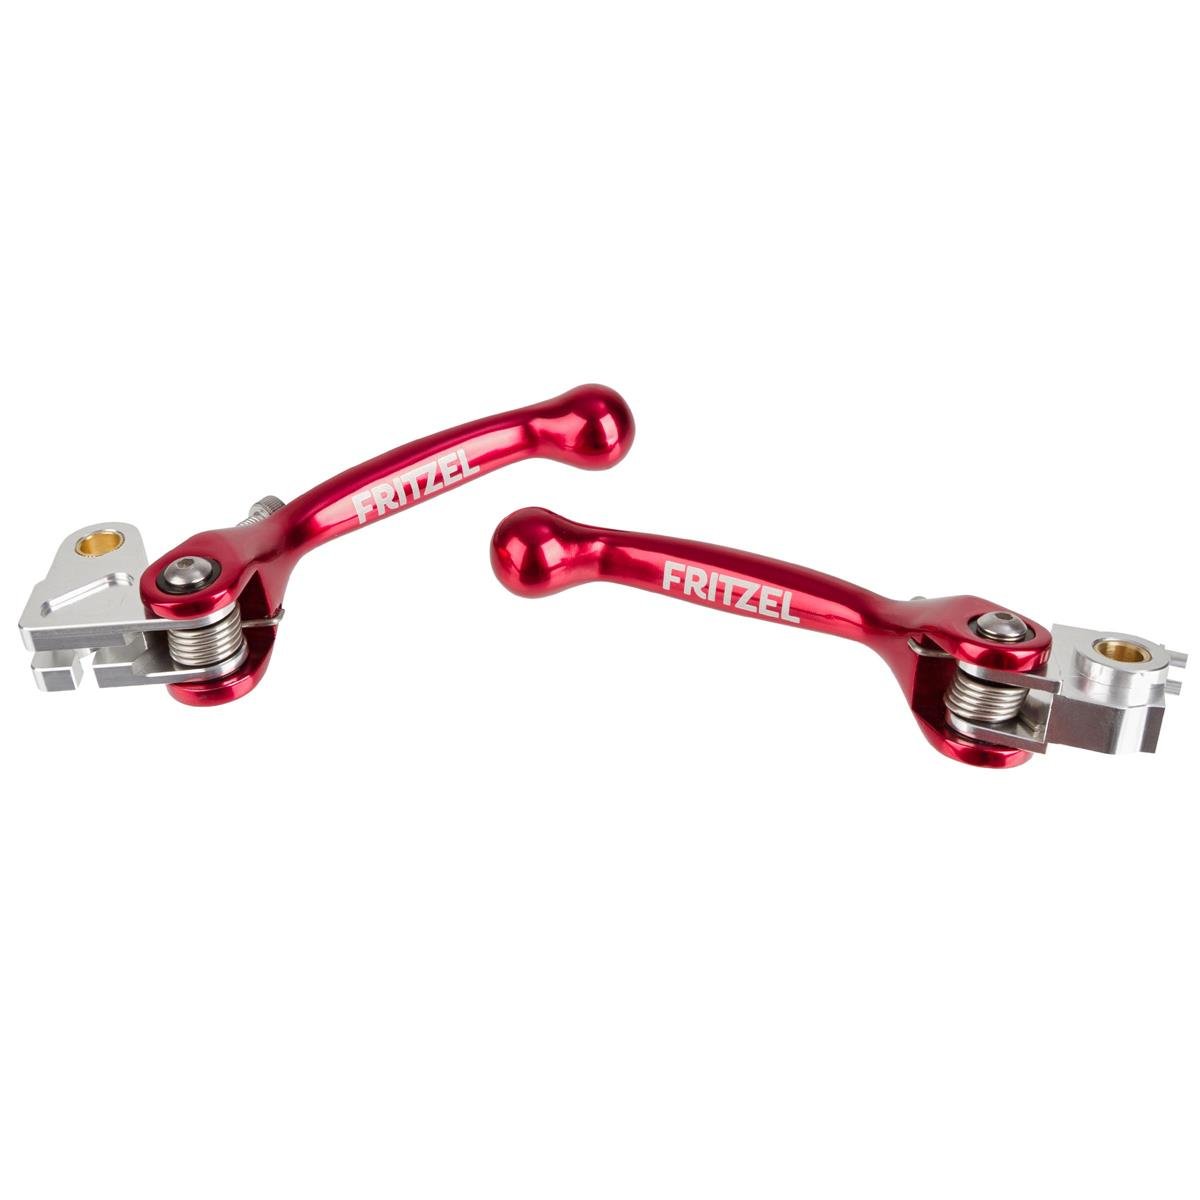 FRITZEL Brems-/Kupplungshebel-Set Renngespann Honda CRF 250/450 07-17, Aluminium, einstellbar, Rot